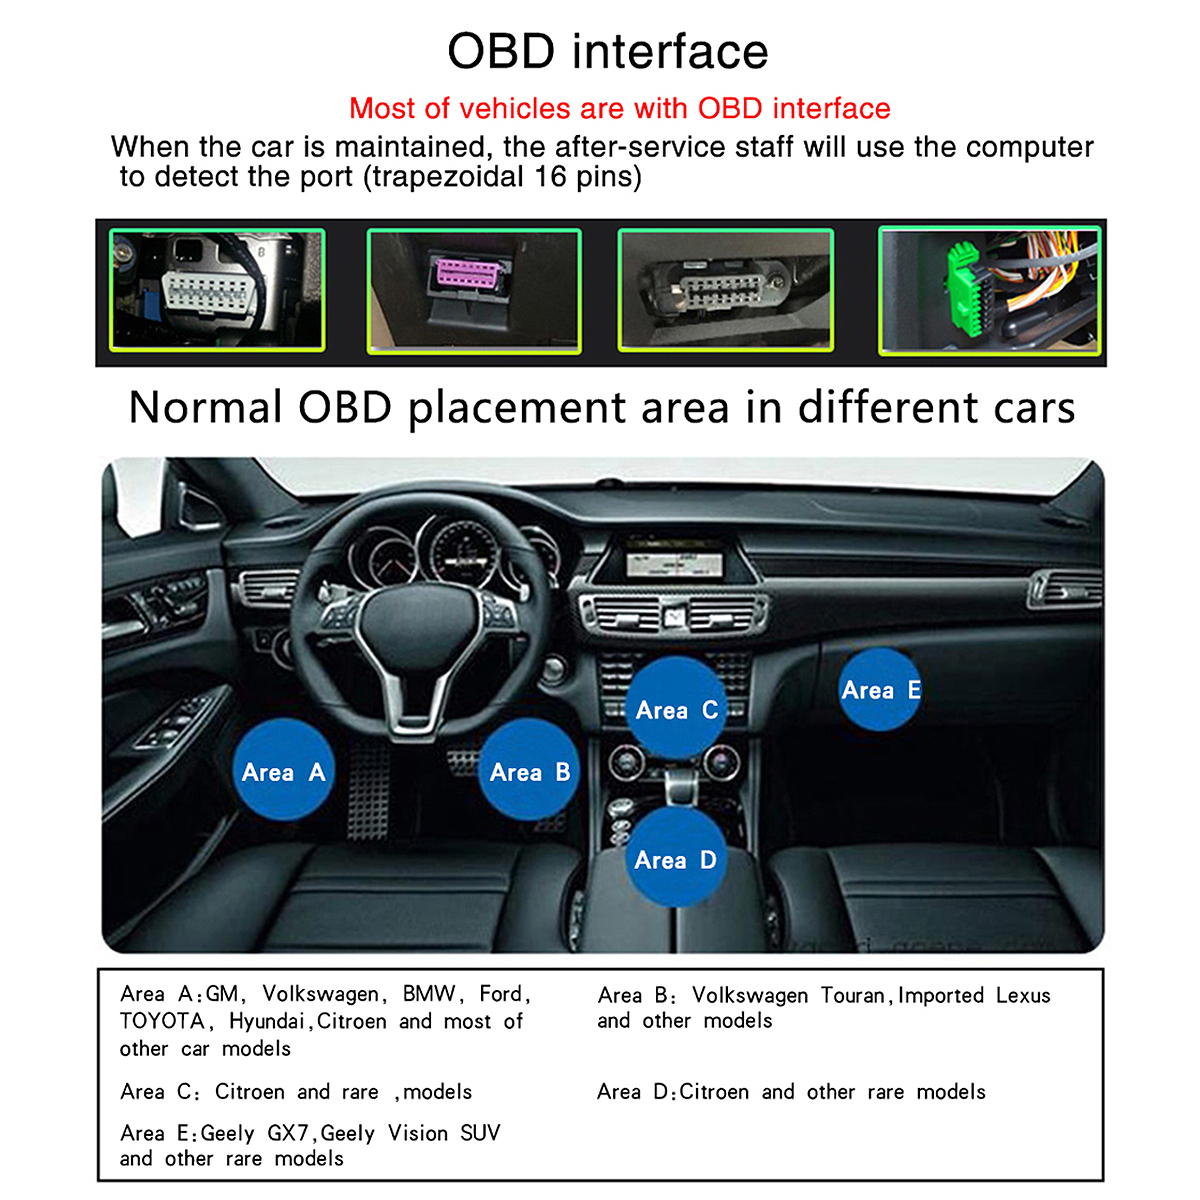 43-Inch-P12-Car-HUD-Head-Up-Display-OBO-OBO2-Auto-Digital-Meter-Speed-Warning-1303013